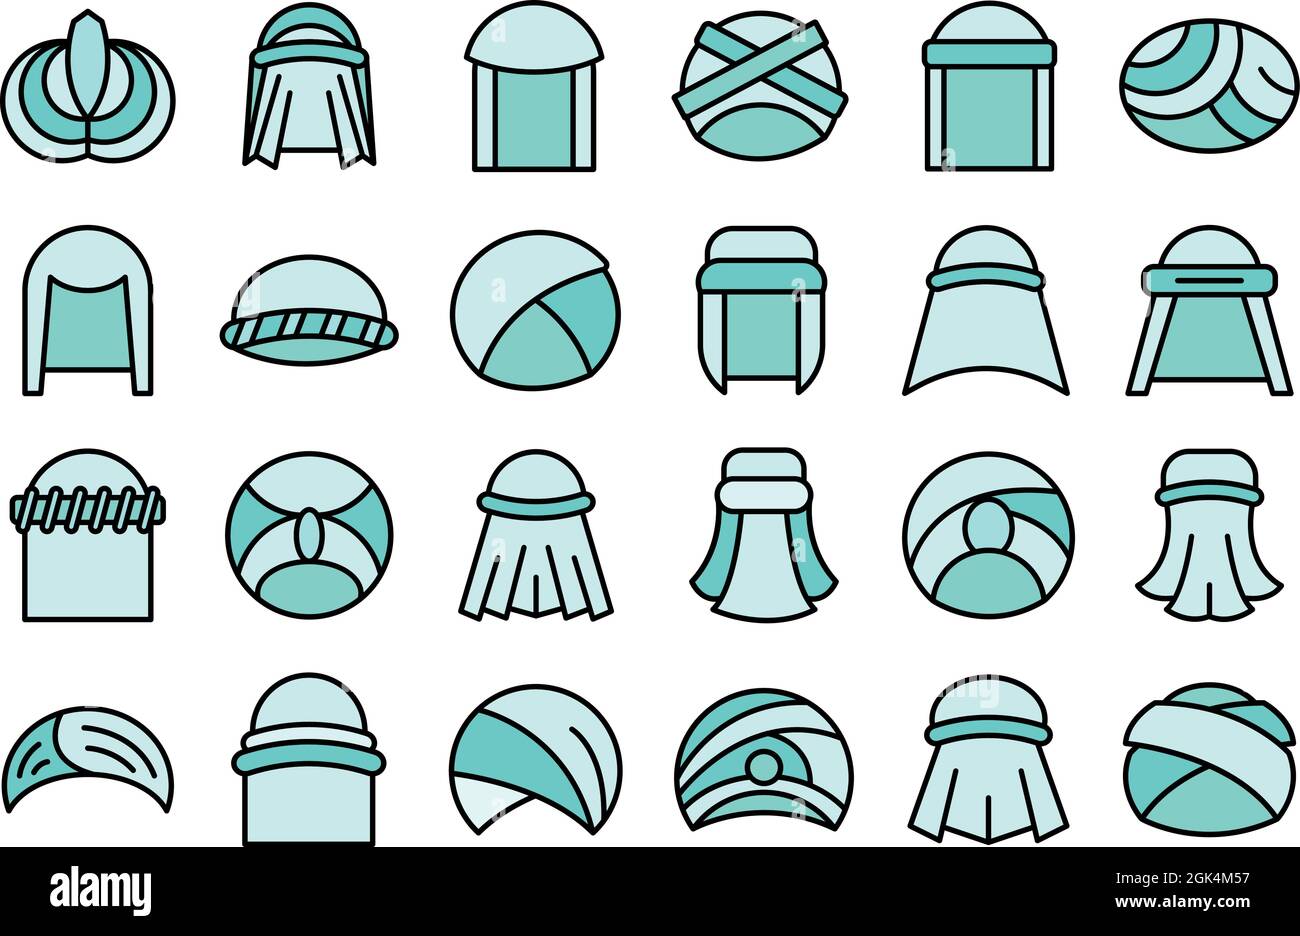 https://c8.alamy.com/comp/2GK4M57/arabic-turban-icons-set-outline-vector-arab-hat-accessories-oriental-turban-2GK4M57.jpg